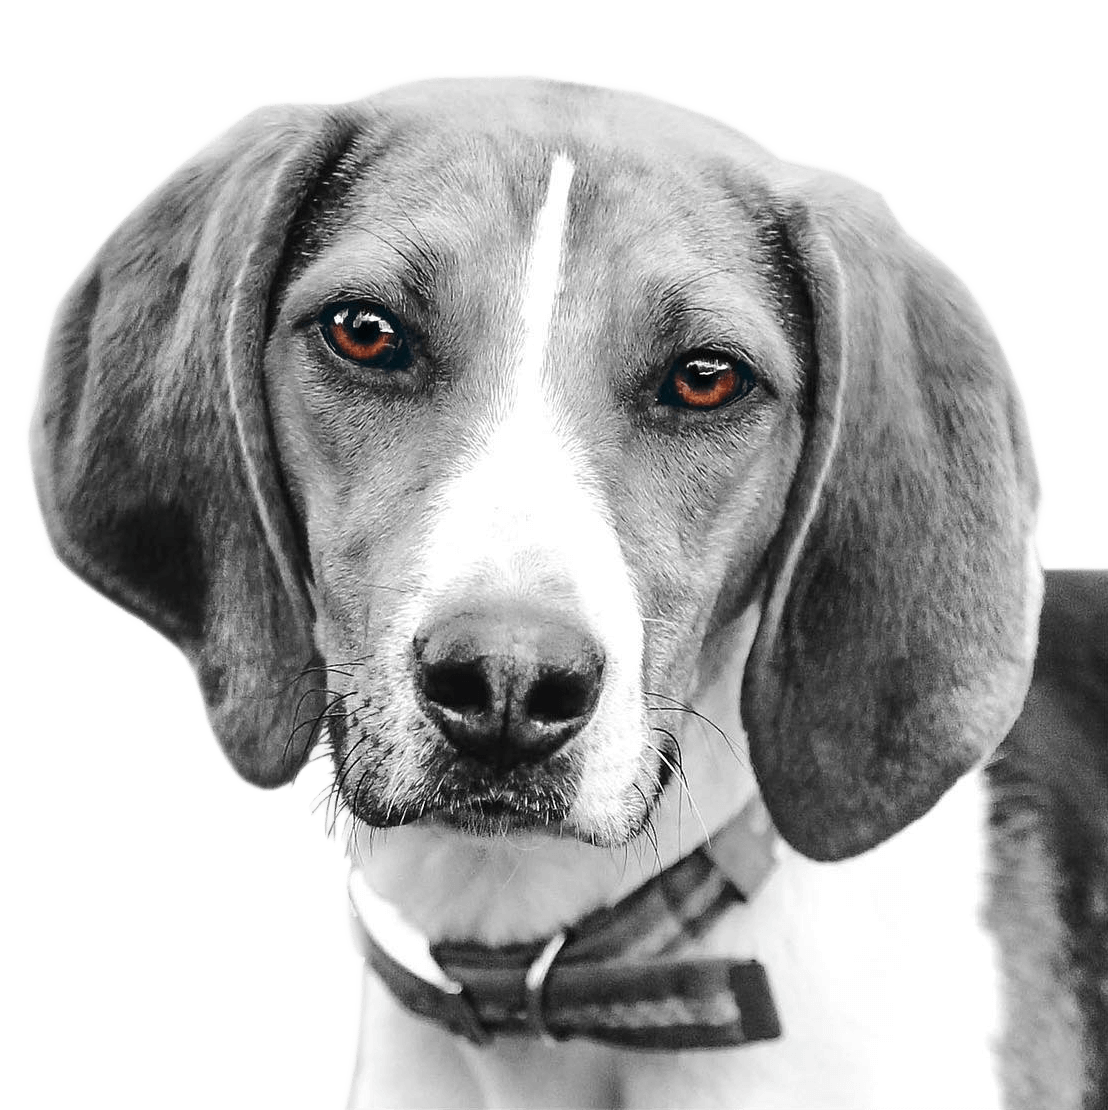 Dog digital portrait